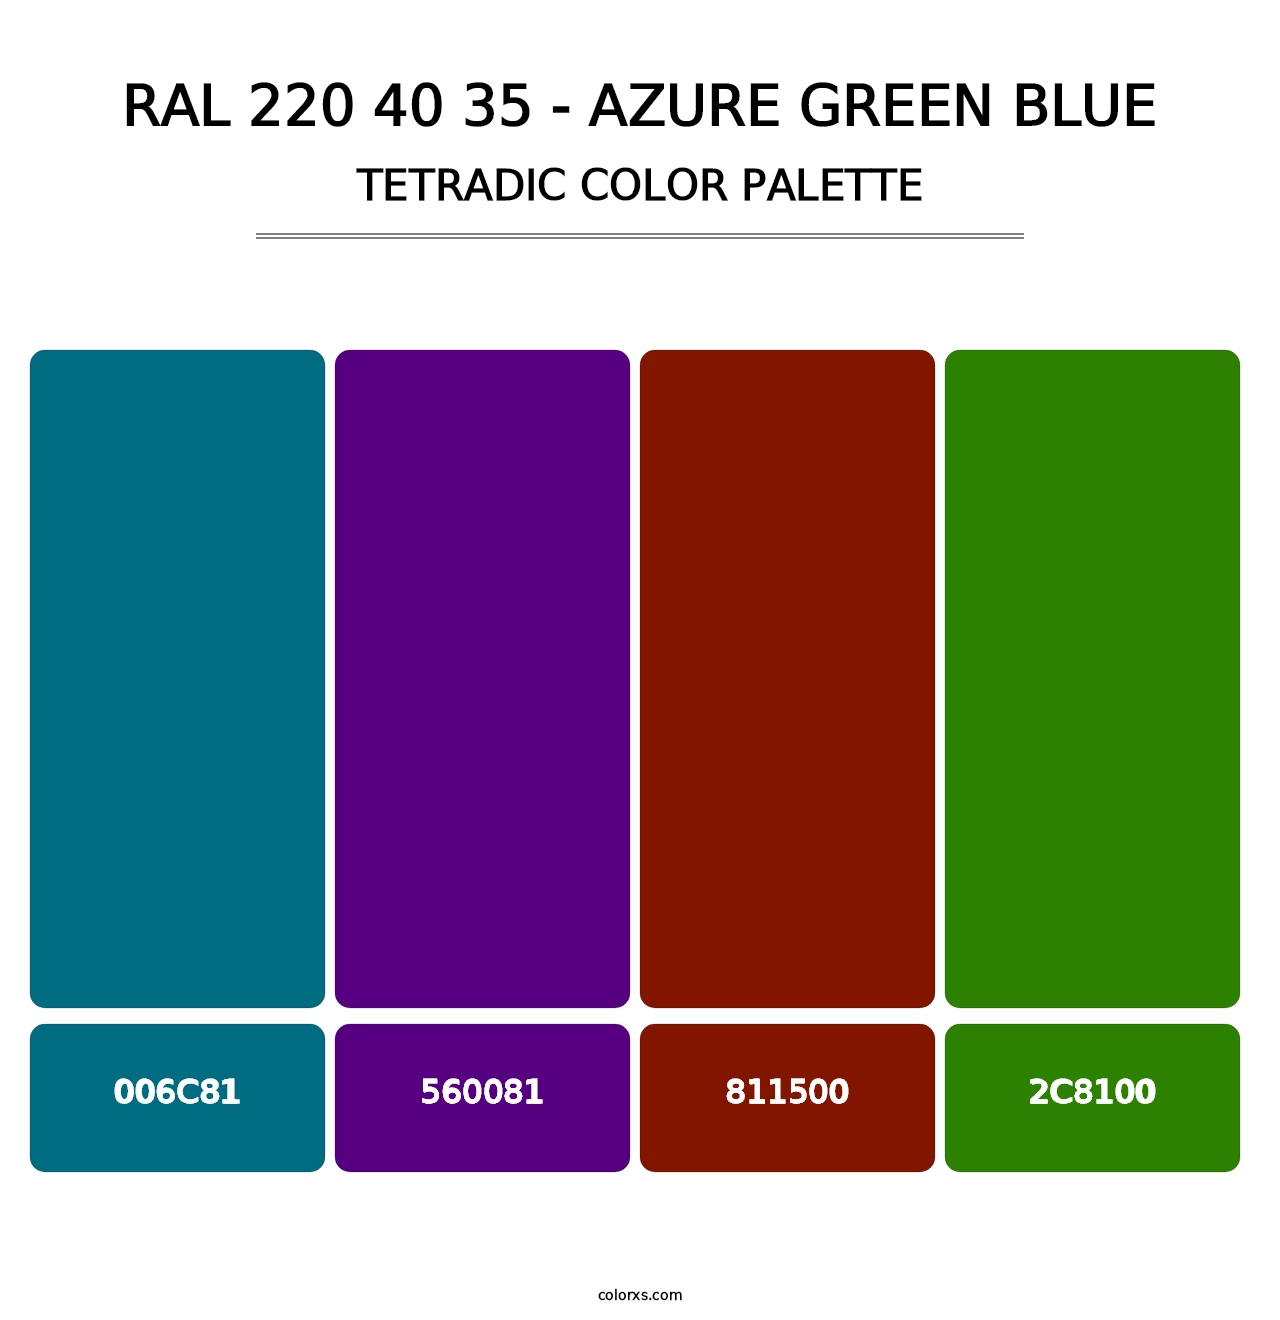 RAL 220 40 35 - Azure Green Blue - Tetradic Color Palette